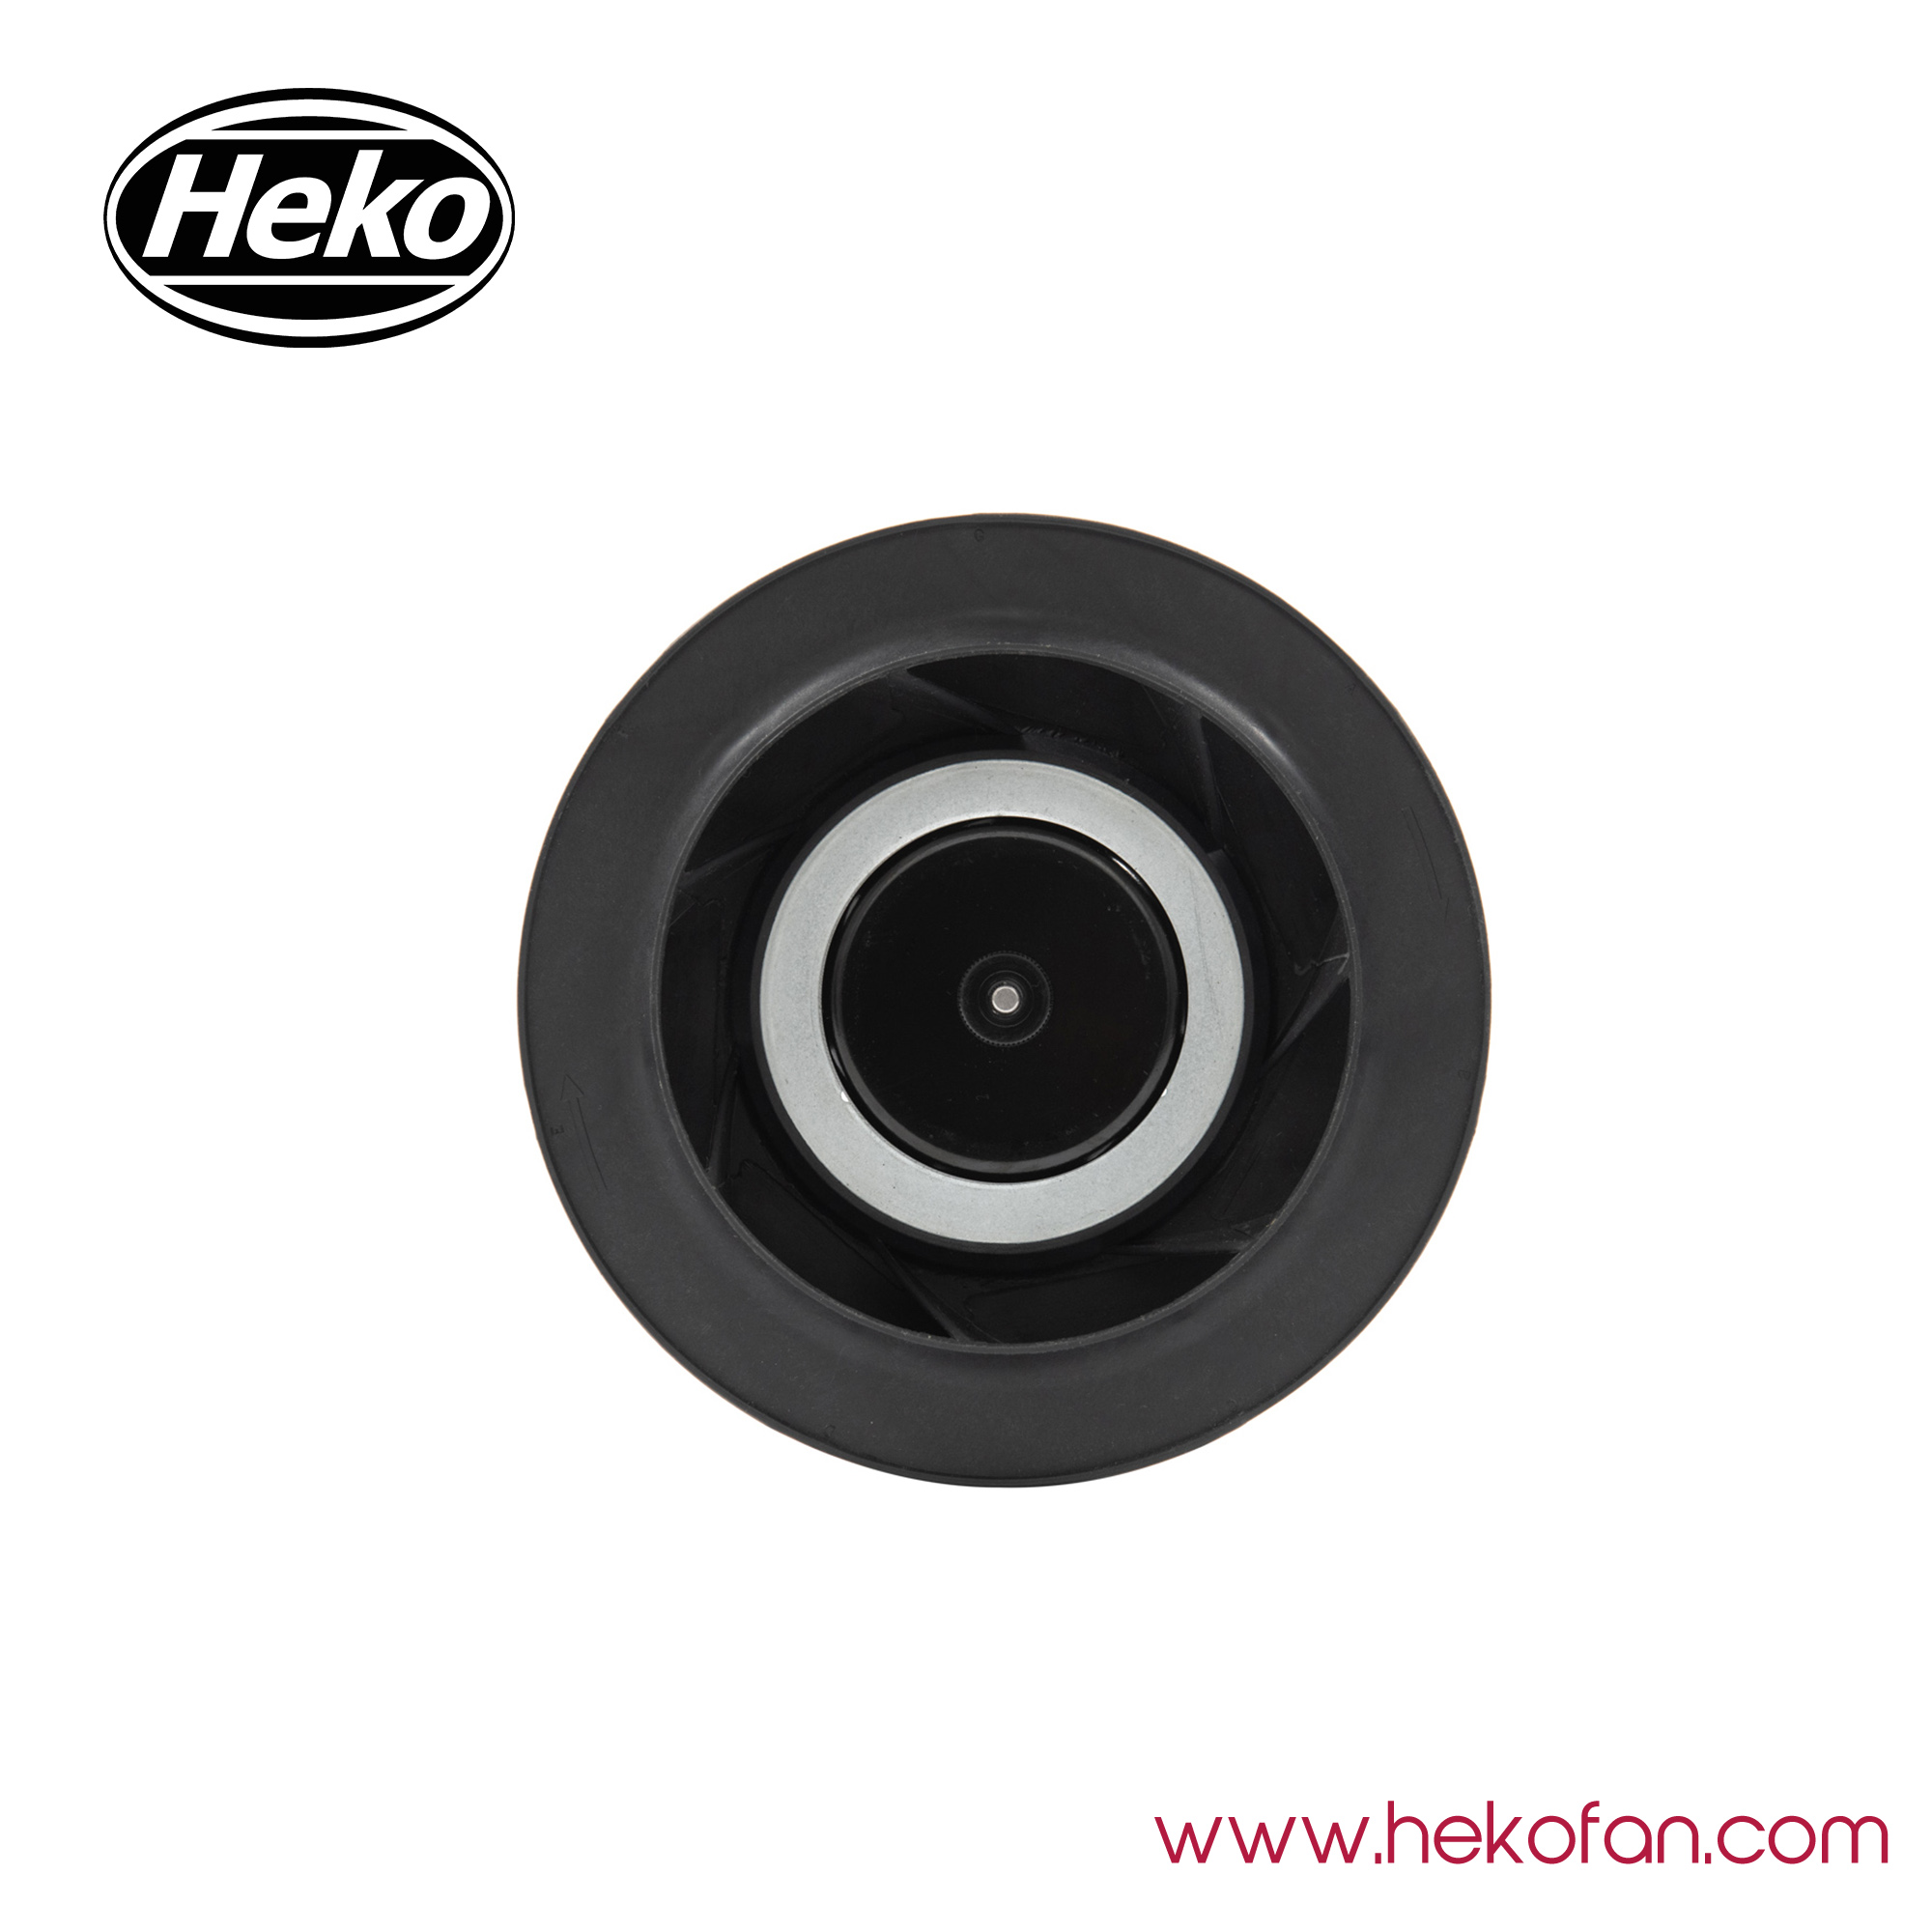 HEKO DC175mm 24V 48V Energy Efficient Centrifugal Fan